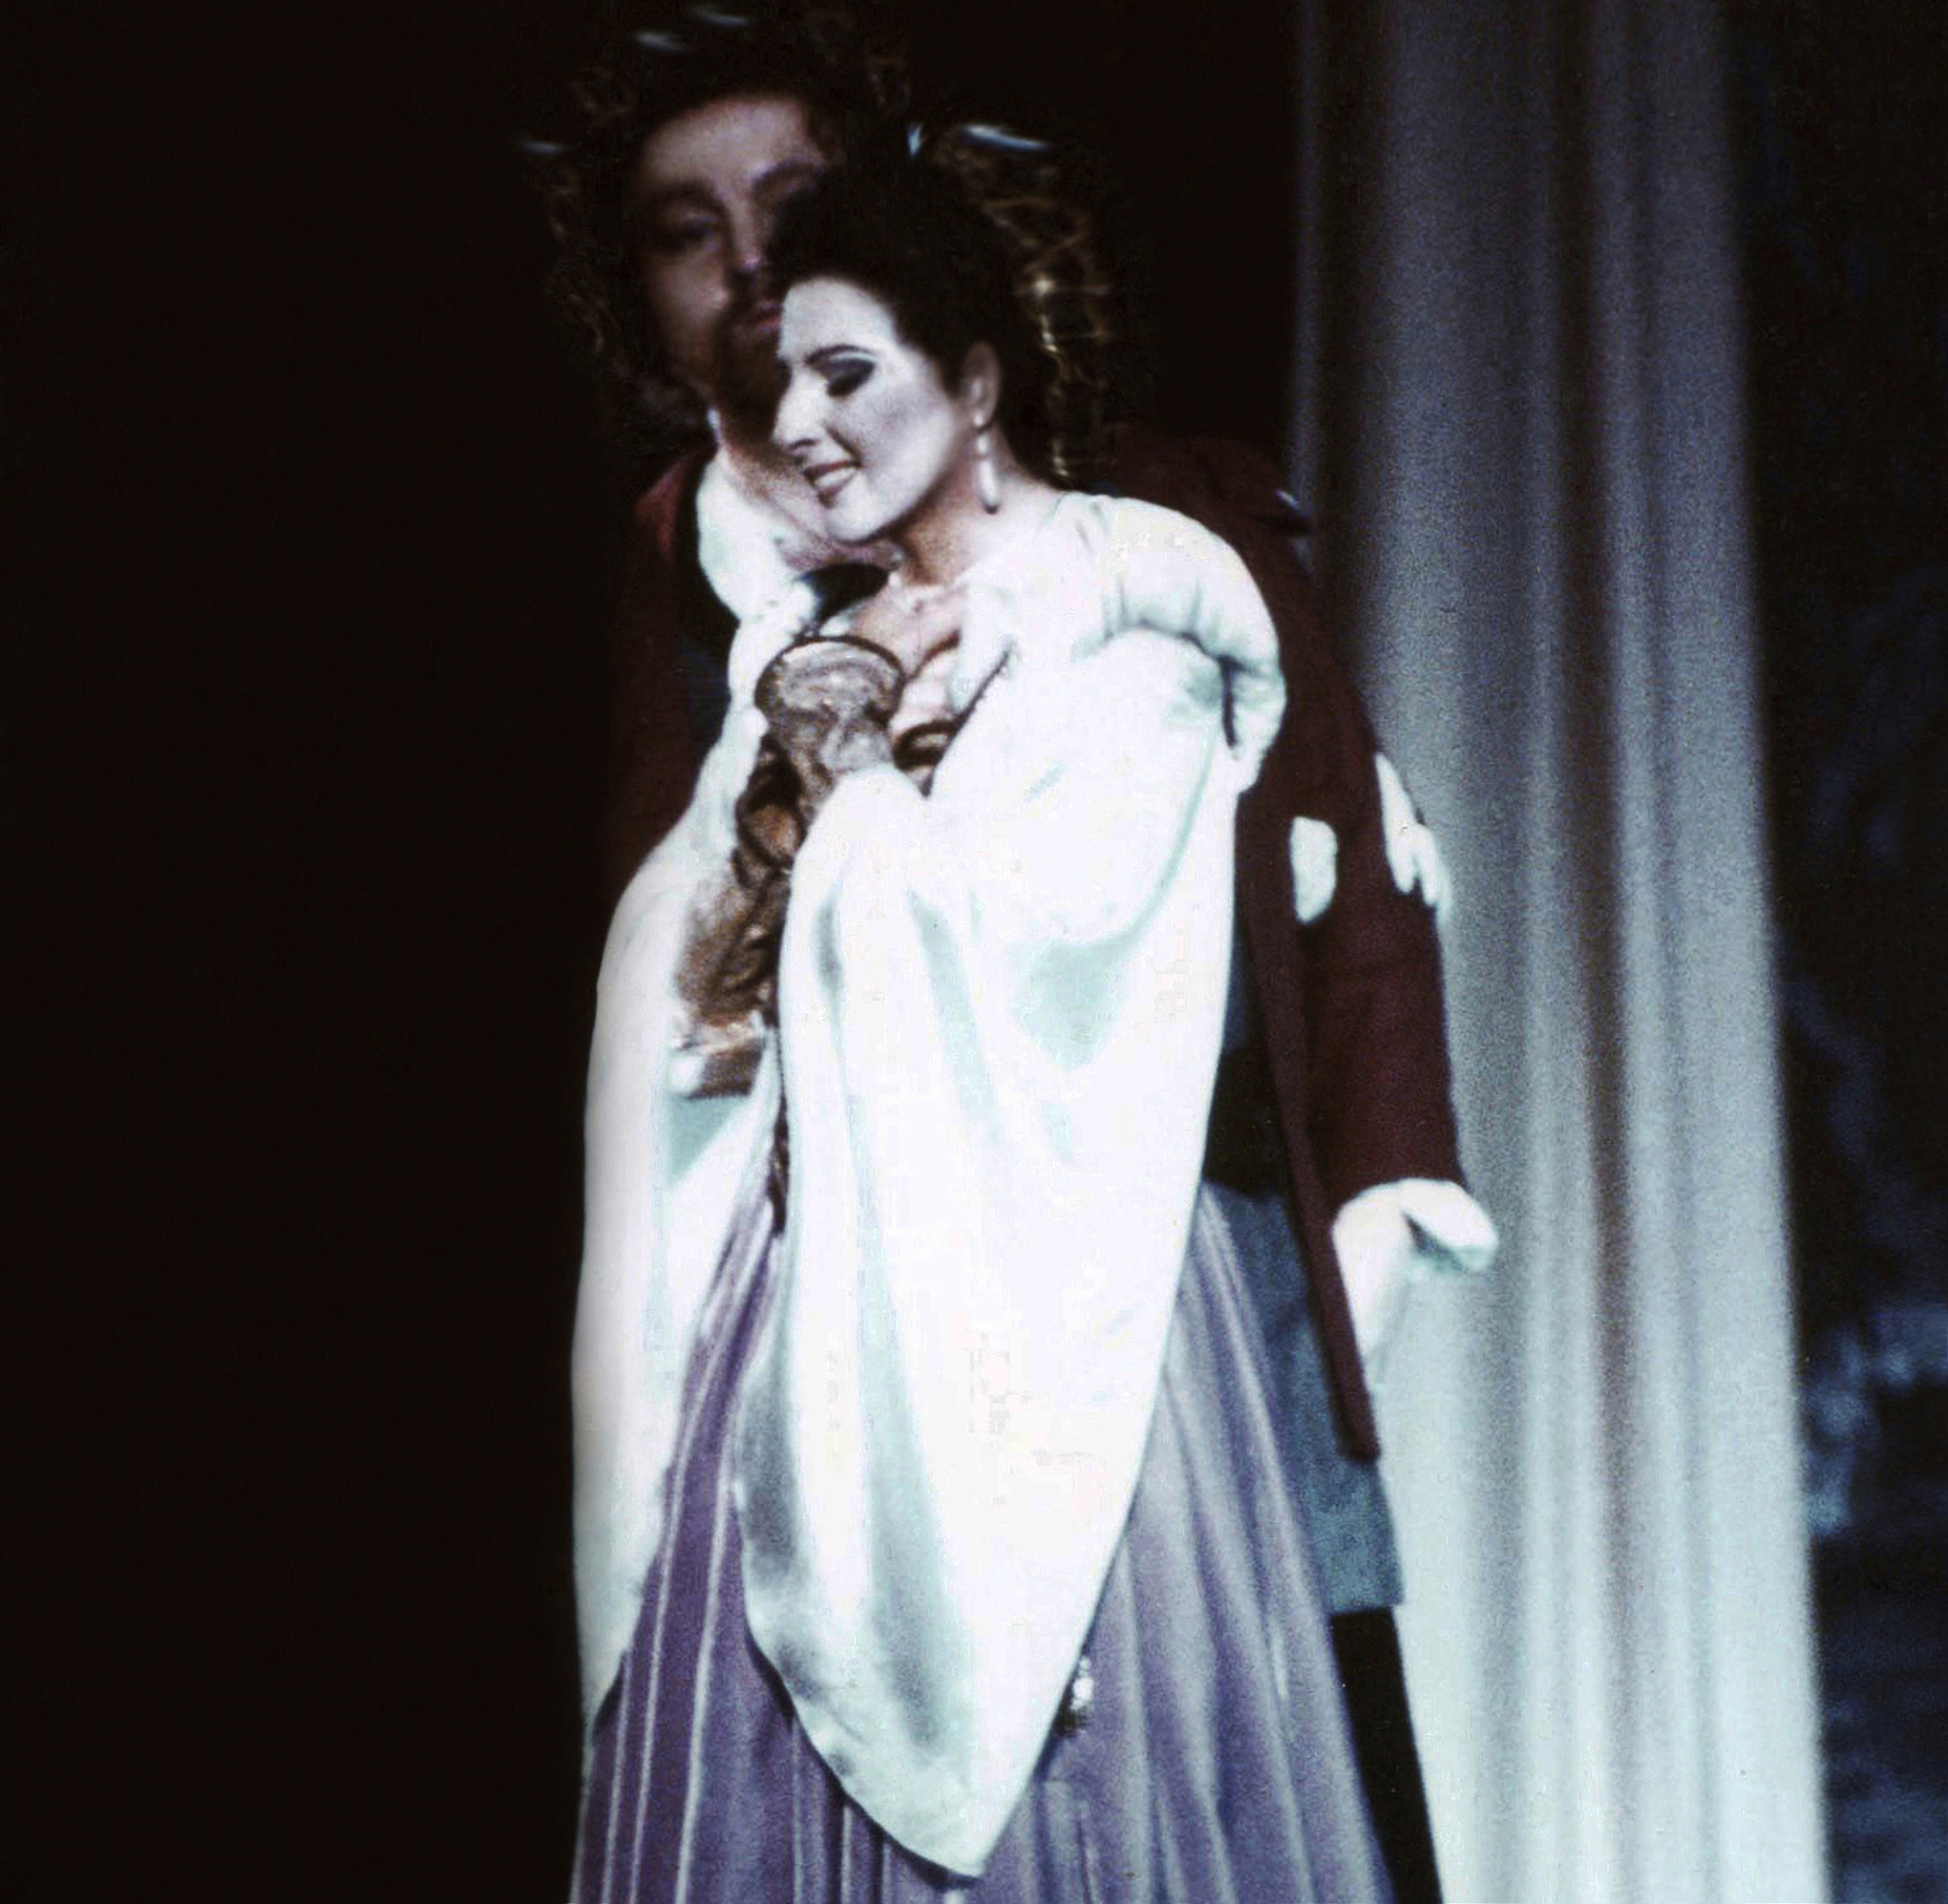 Lucia Aliberti with the American tenor Chris Merritt⚘Opera⚘"Guglielmo Tell"⚘Cagliari Opera House⚘On Stage⚘Photo taken from the TV News⚘Video⚘:http://www.luciaaliberti.it #luciaaliberti #chrismerritt #guglielmotell #opera #cagliarioperahouse #onstage #tvnews #tvportrait #video